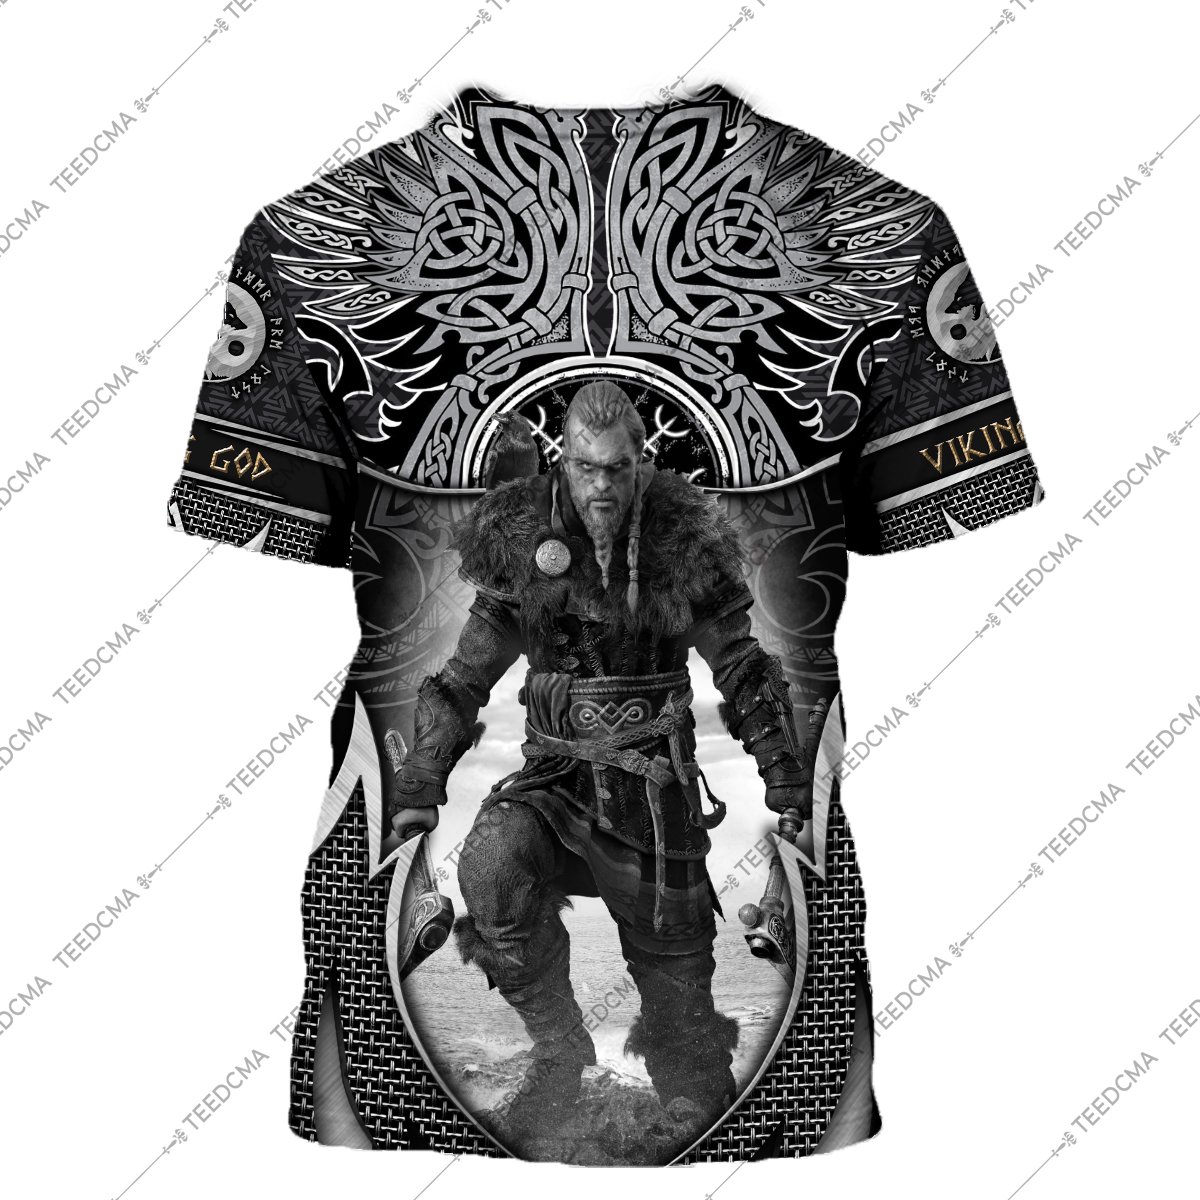 assassin's creed valhalla viking all over printed tshirt - back